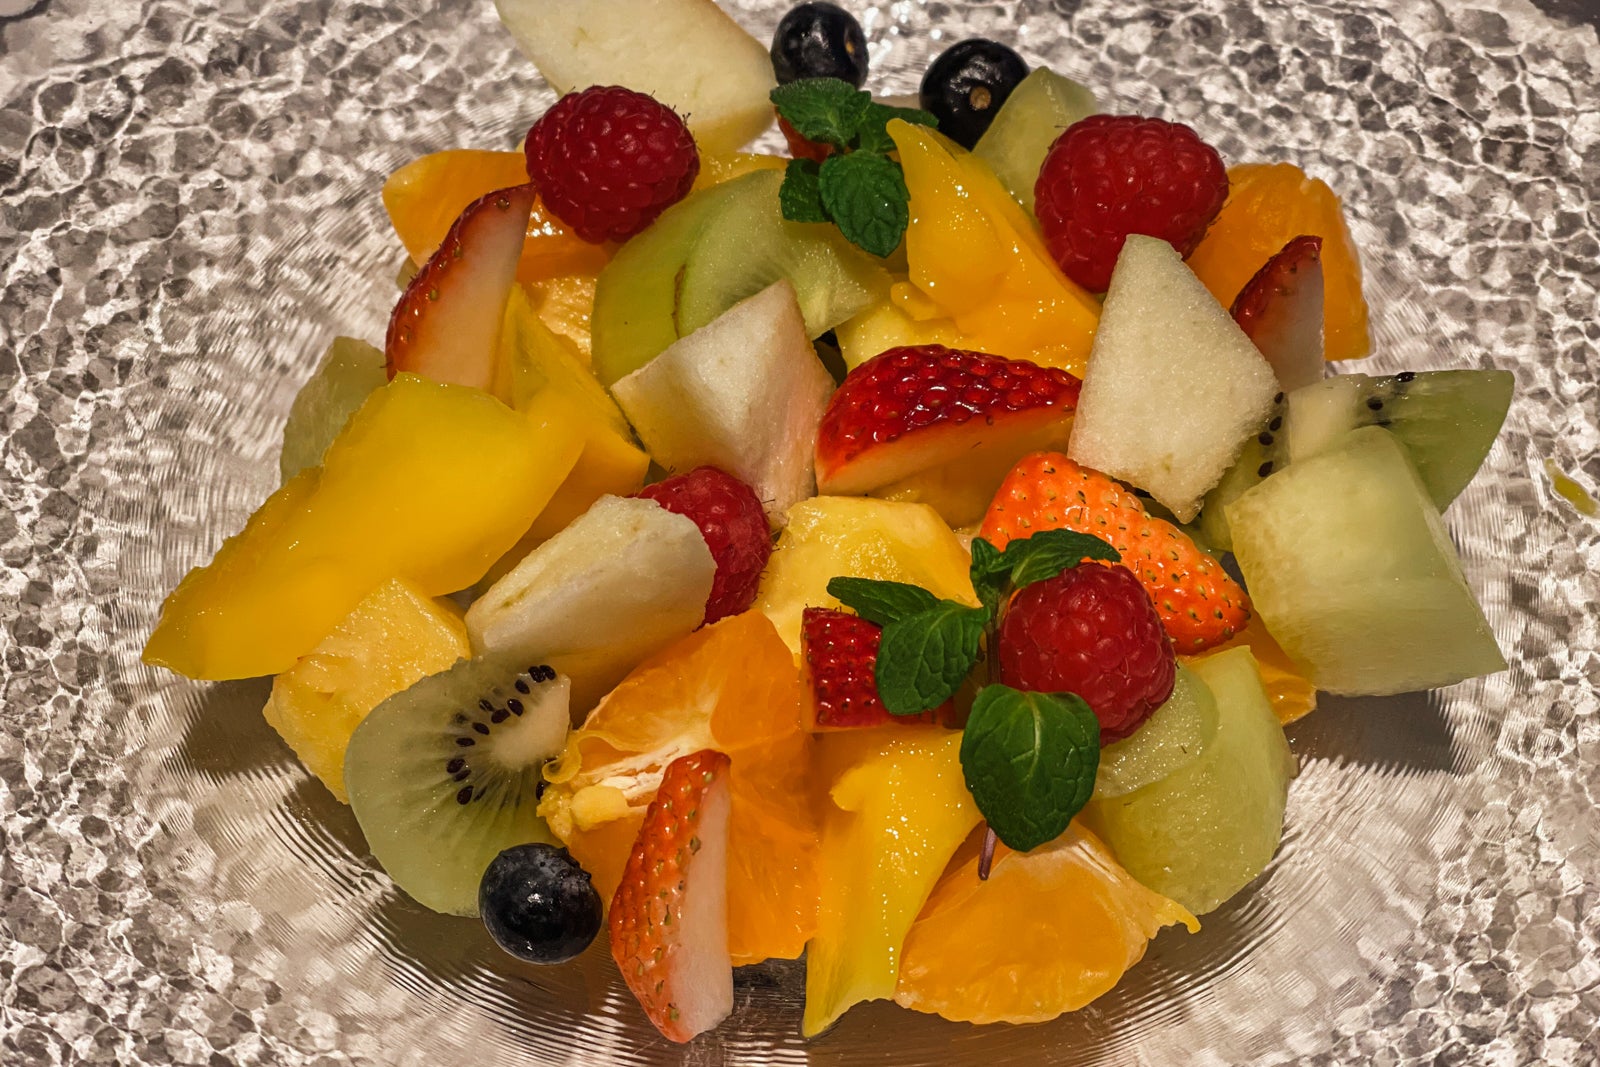 Room service fruit salad at The Ritz-Carlton, Kyoto